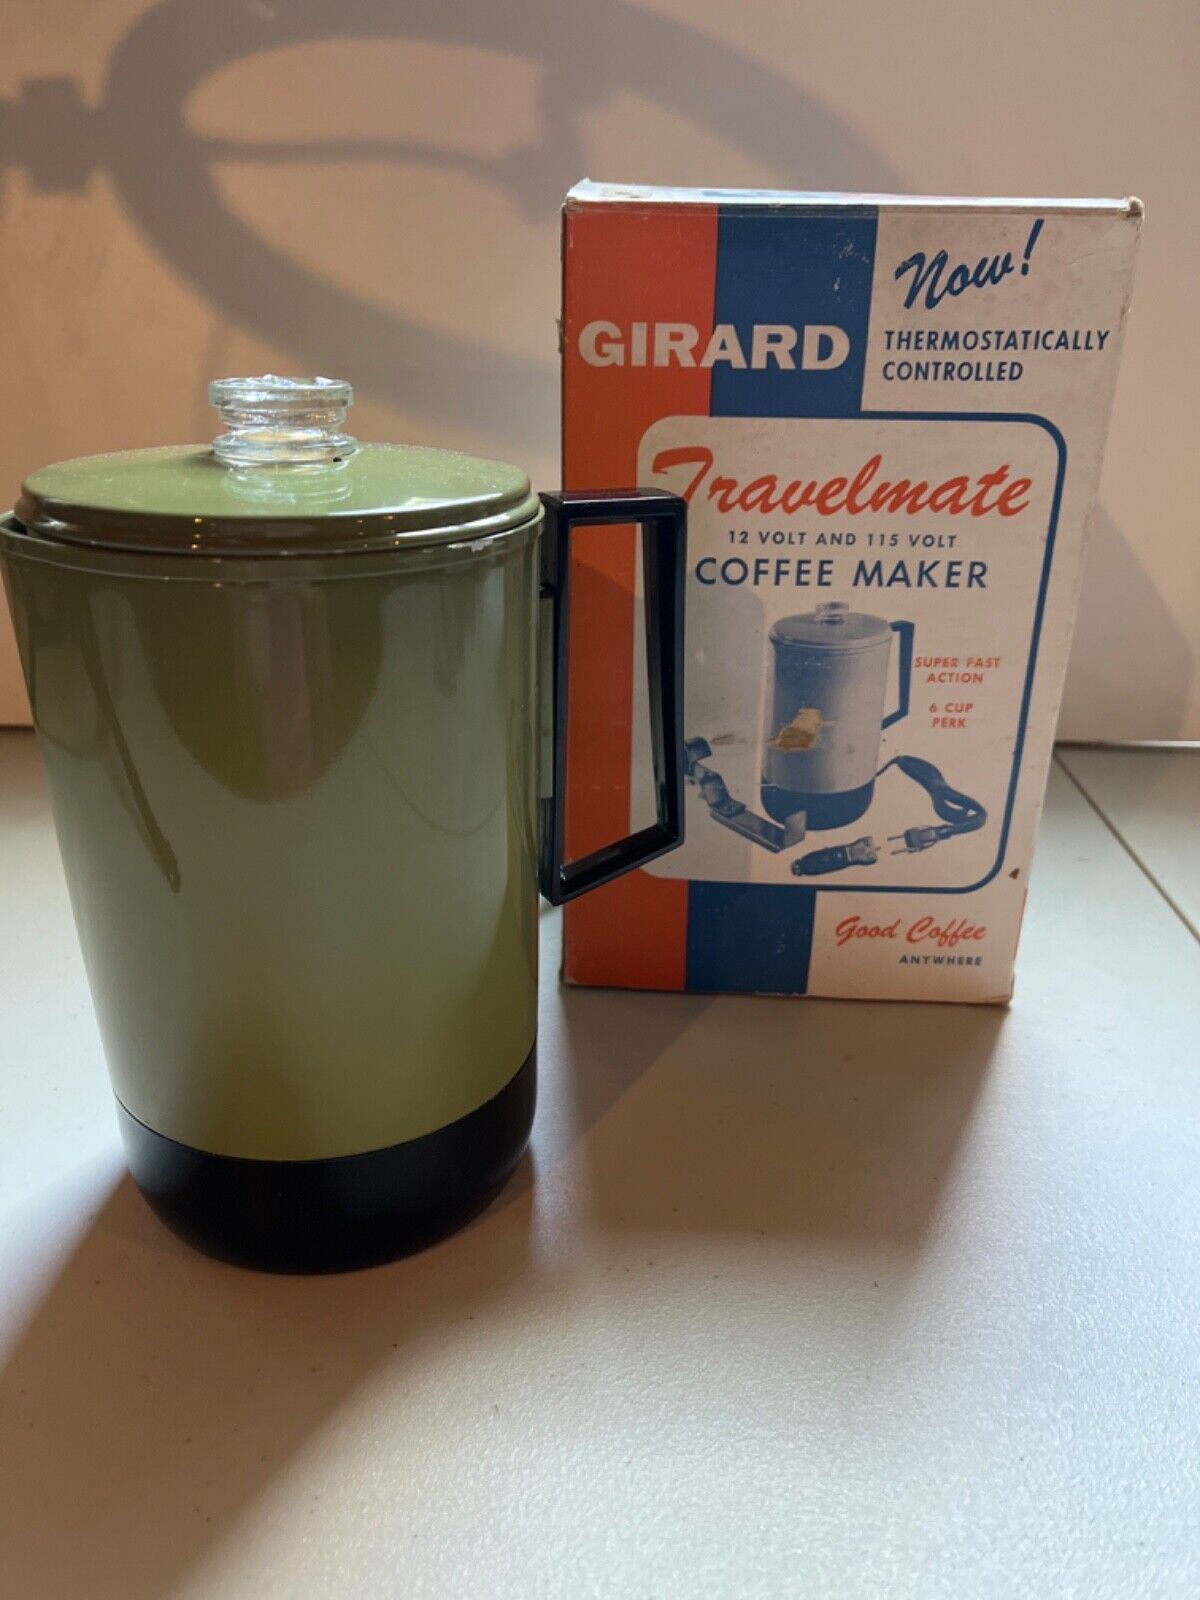 Vintage Girard Travelmate Coffee Maker untested